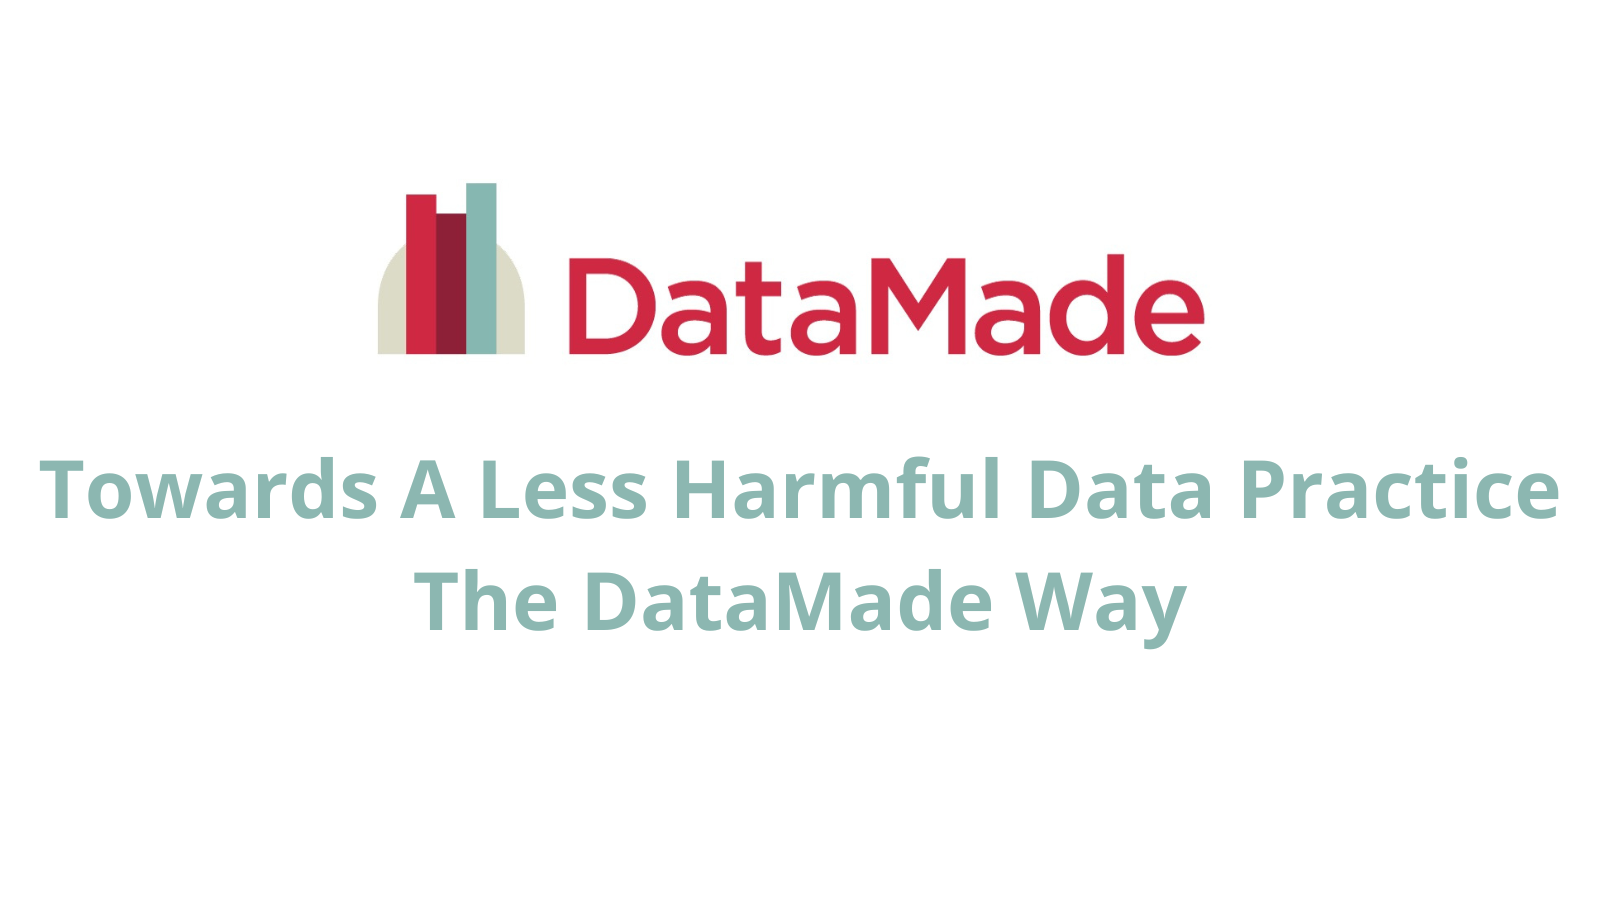 Towards a less harmful data practice the DataMade way